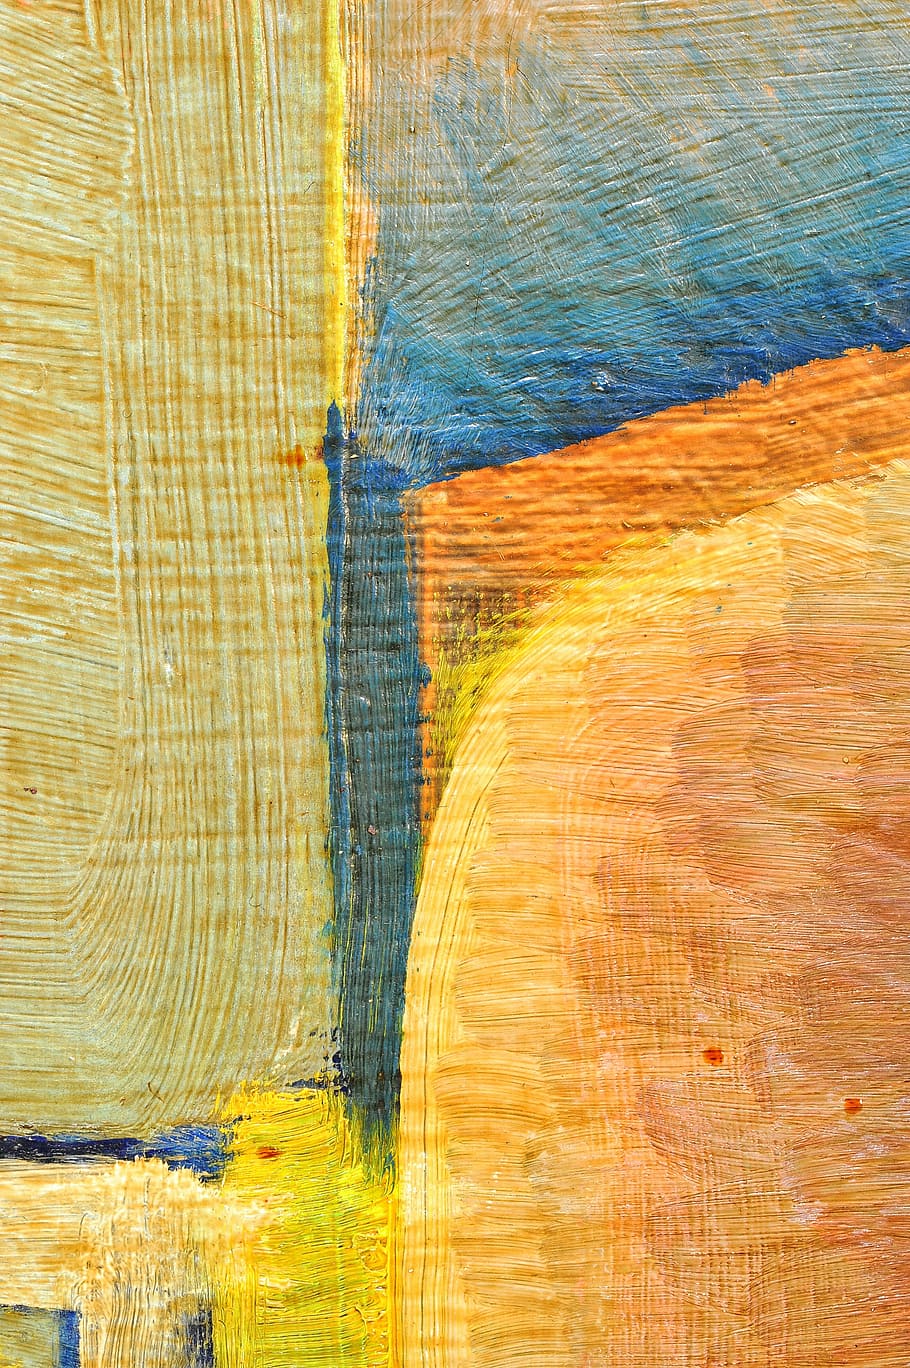 kuning, biru, abstrak, lukisan, kerangka kerja, menggambar, warna, tekstur, cat, dinding